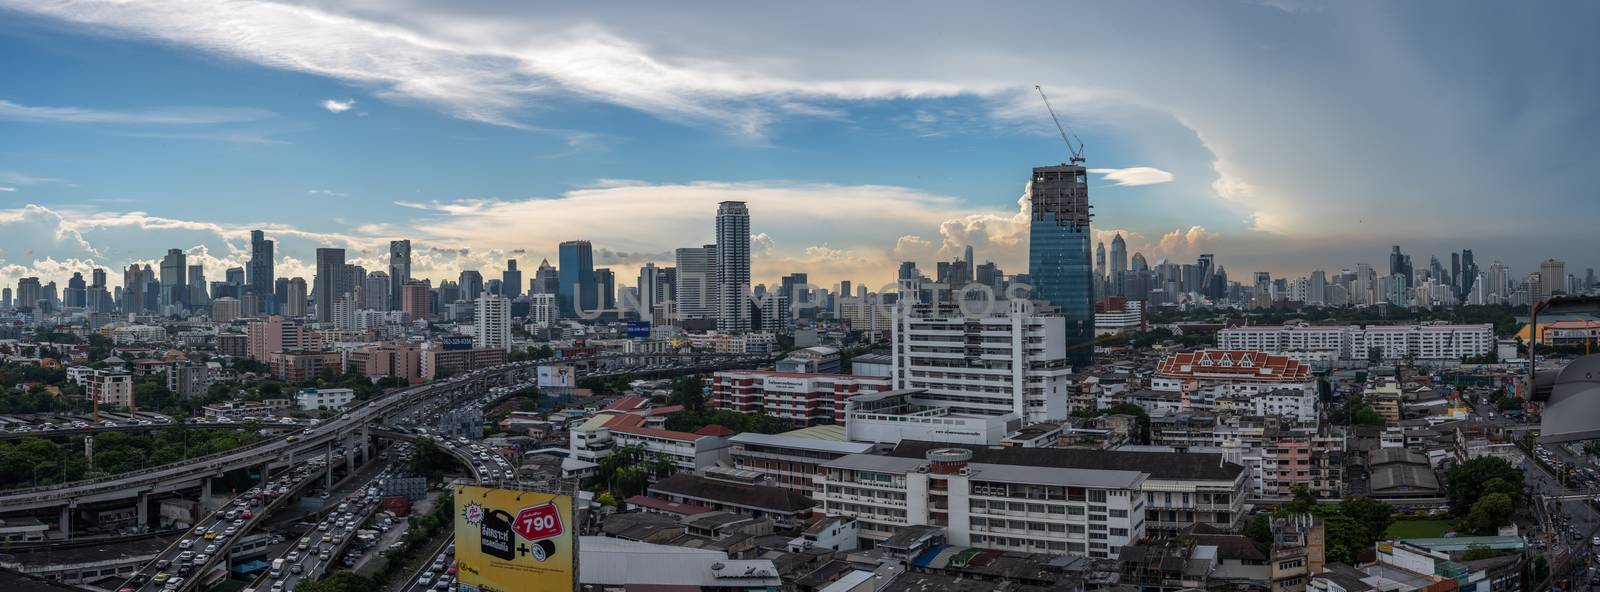 Panorama cityscape with expressway of Bangkok city by PongMoji